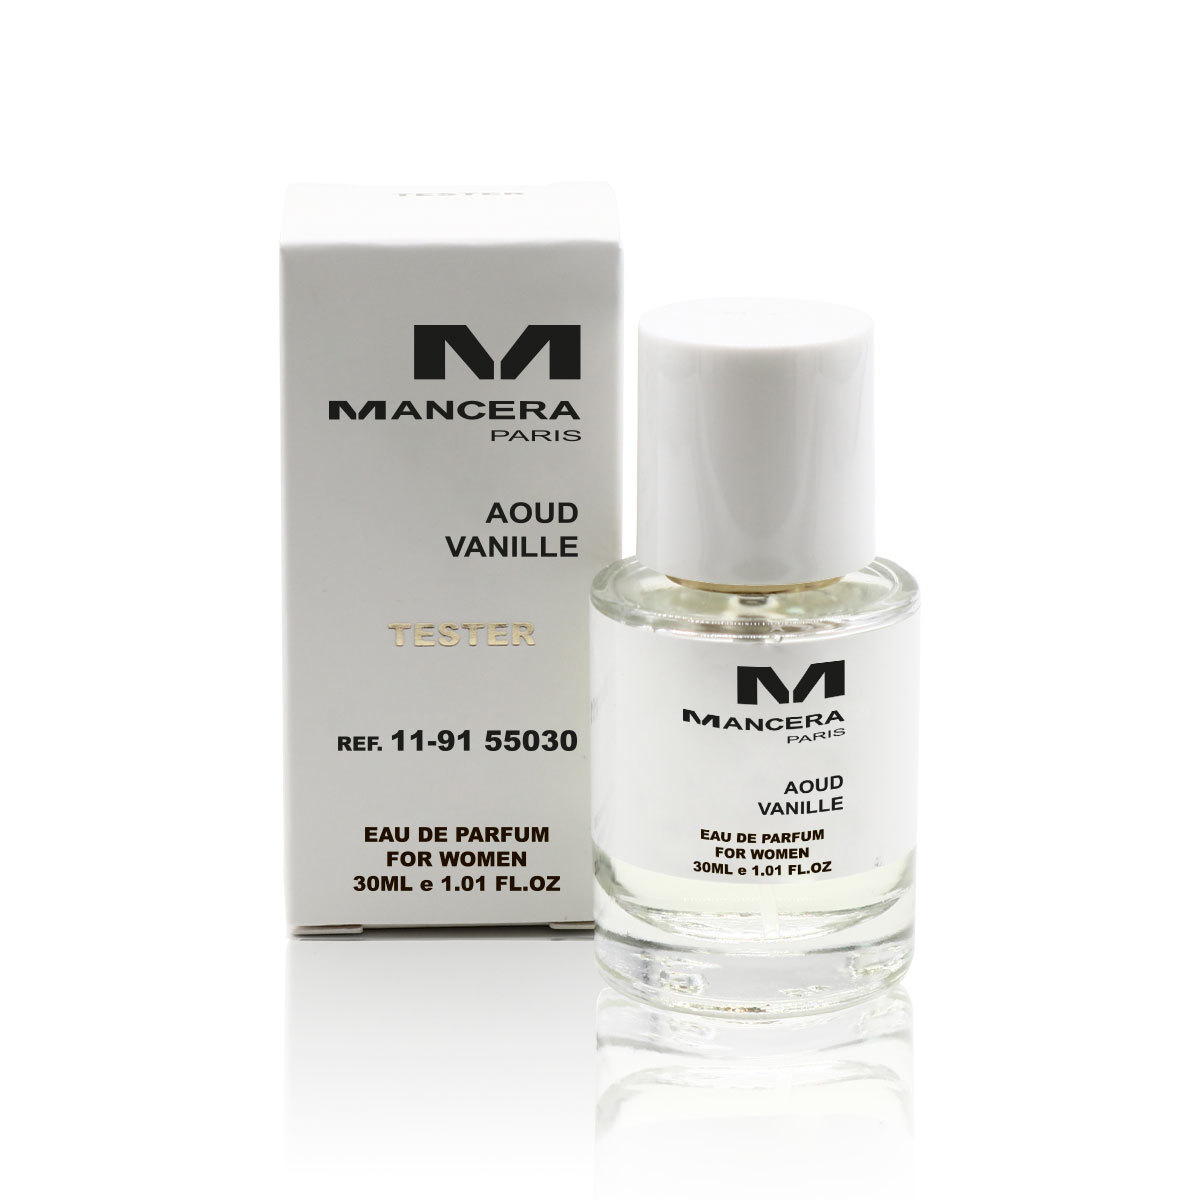 Mancera Aoud Vanille by Mancera - Buy online